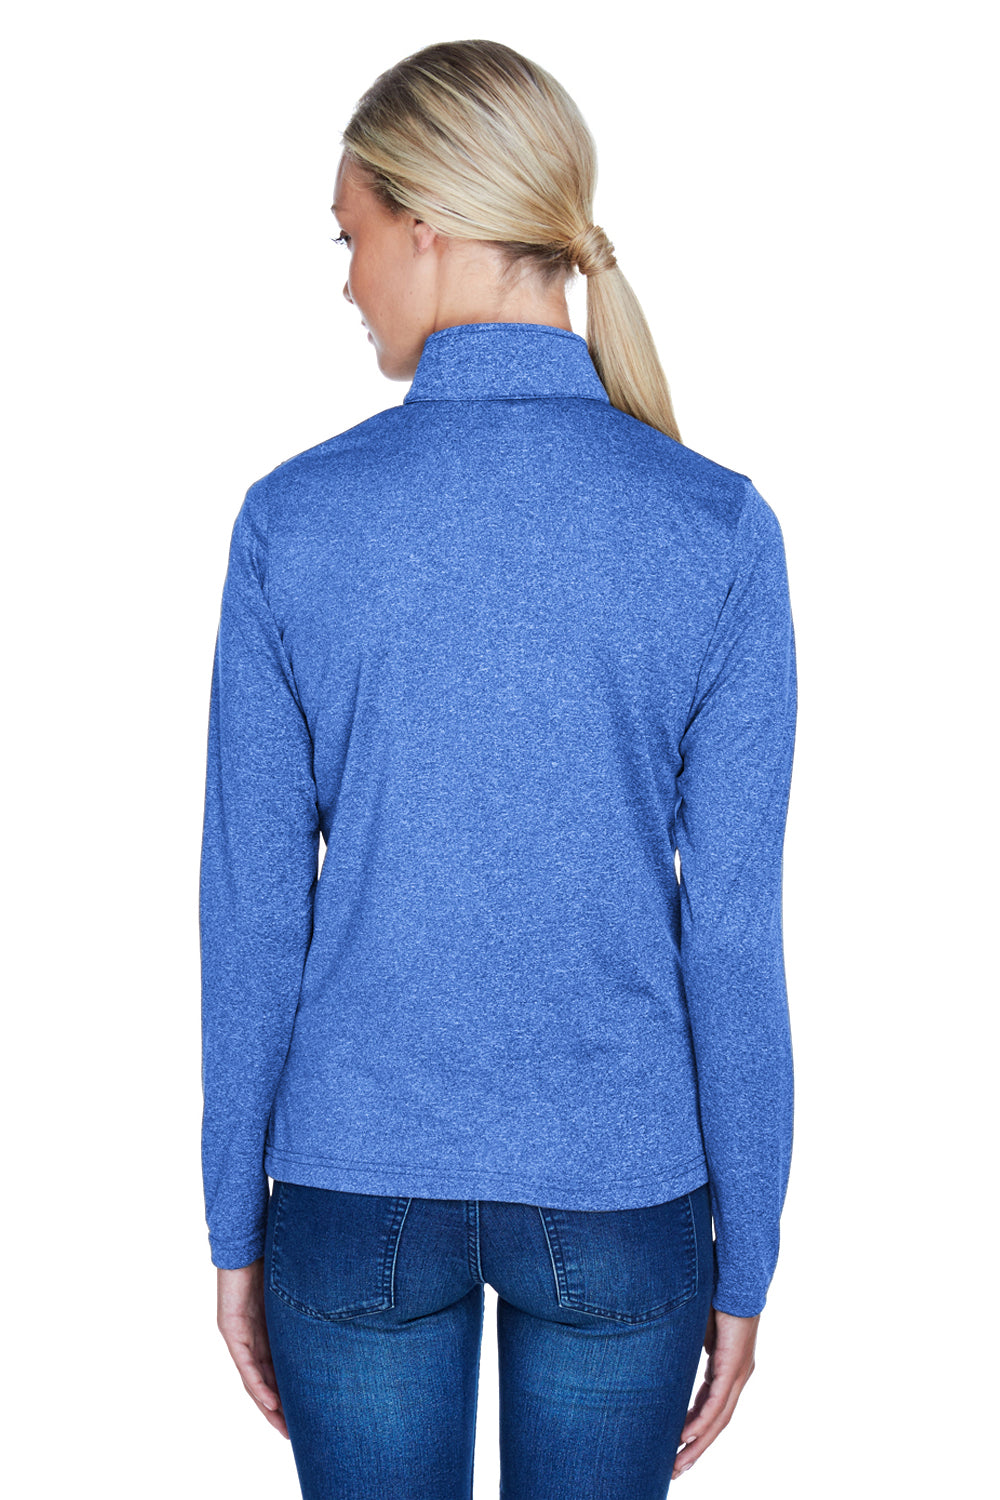 UltraClub 8618W Womens Heather Cool & Dry Performance Moisture Wicking 1/4 Zip Sweatshirt Royal Blue Back